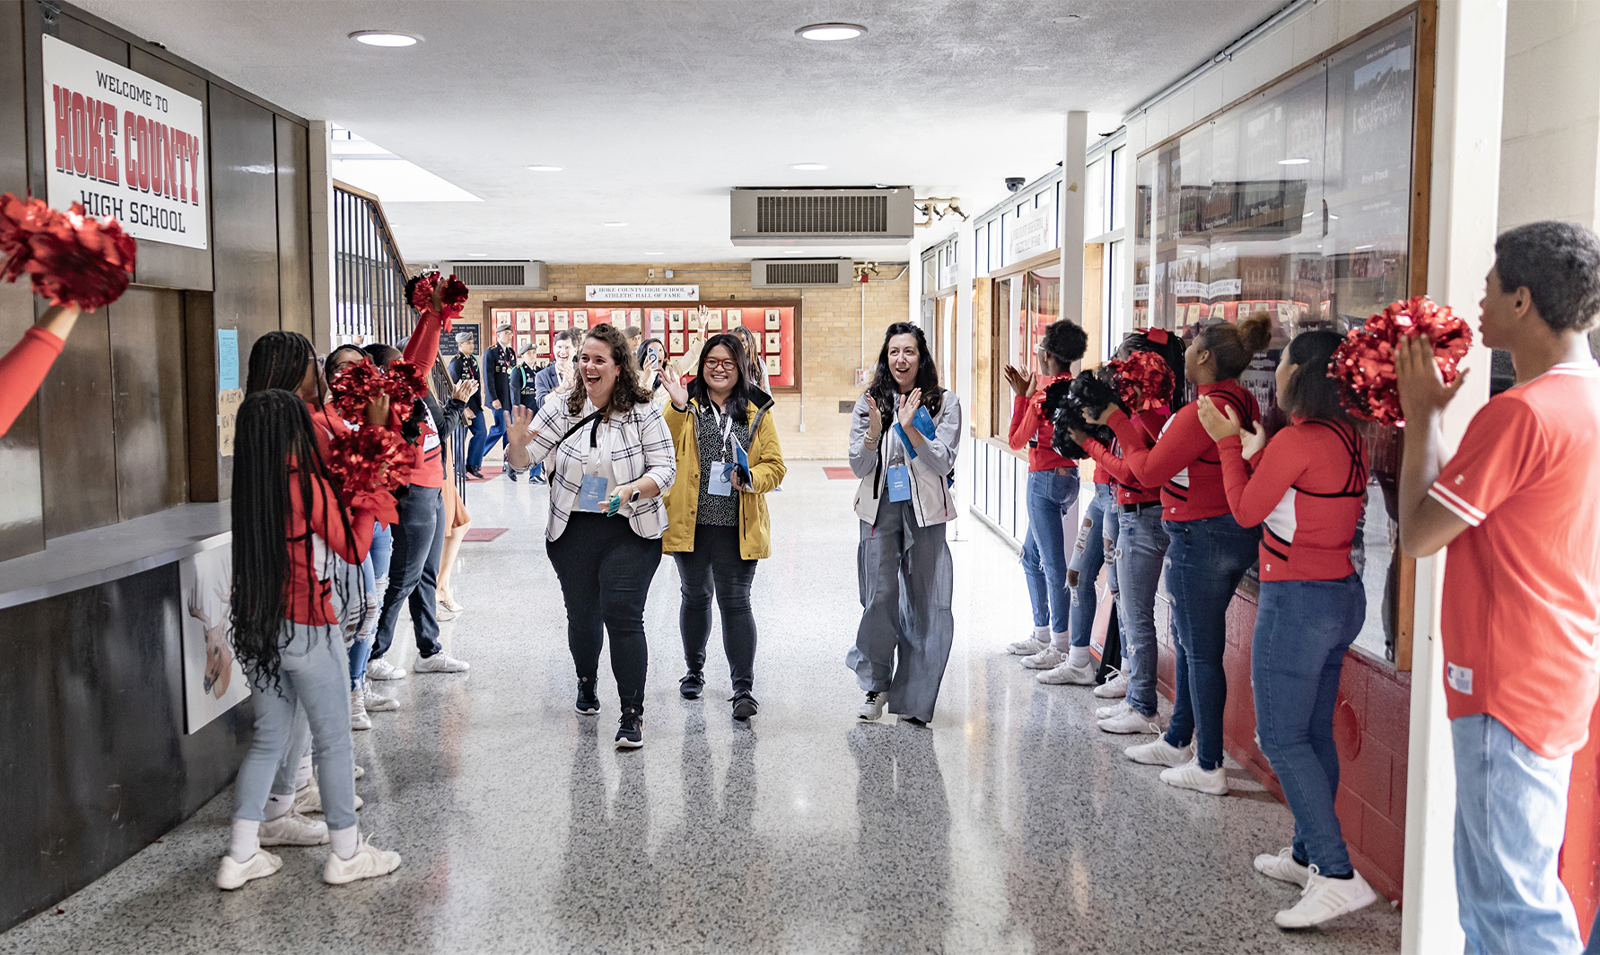 Cheerleaders with pom-poms cheering as school guests walk through a hallway in a high school.